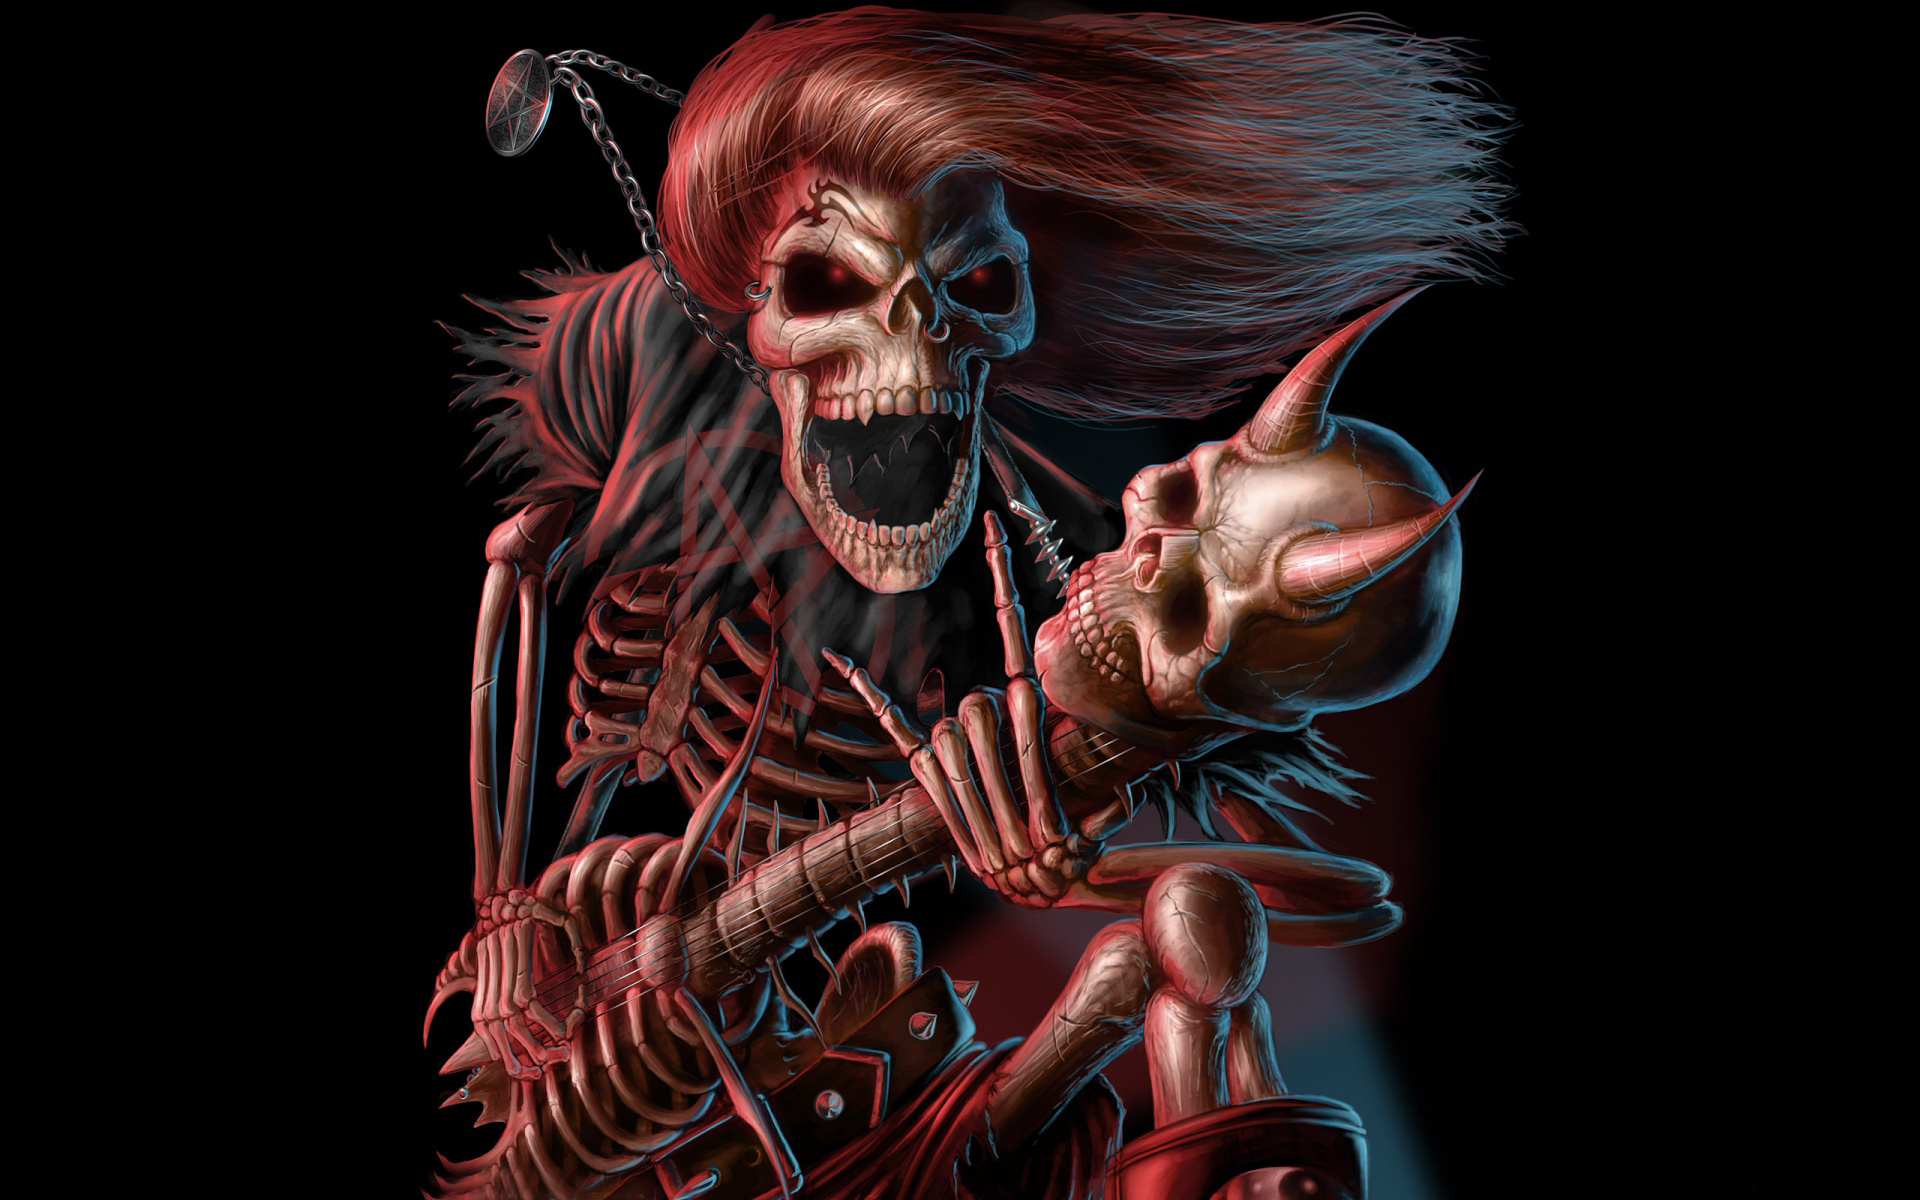 Heavy Metal Music, Black Metal Skulls, Dark and Gritty Metal Art, 1920x1200 HD Desktop